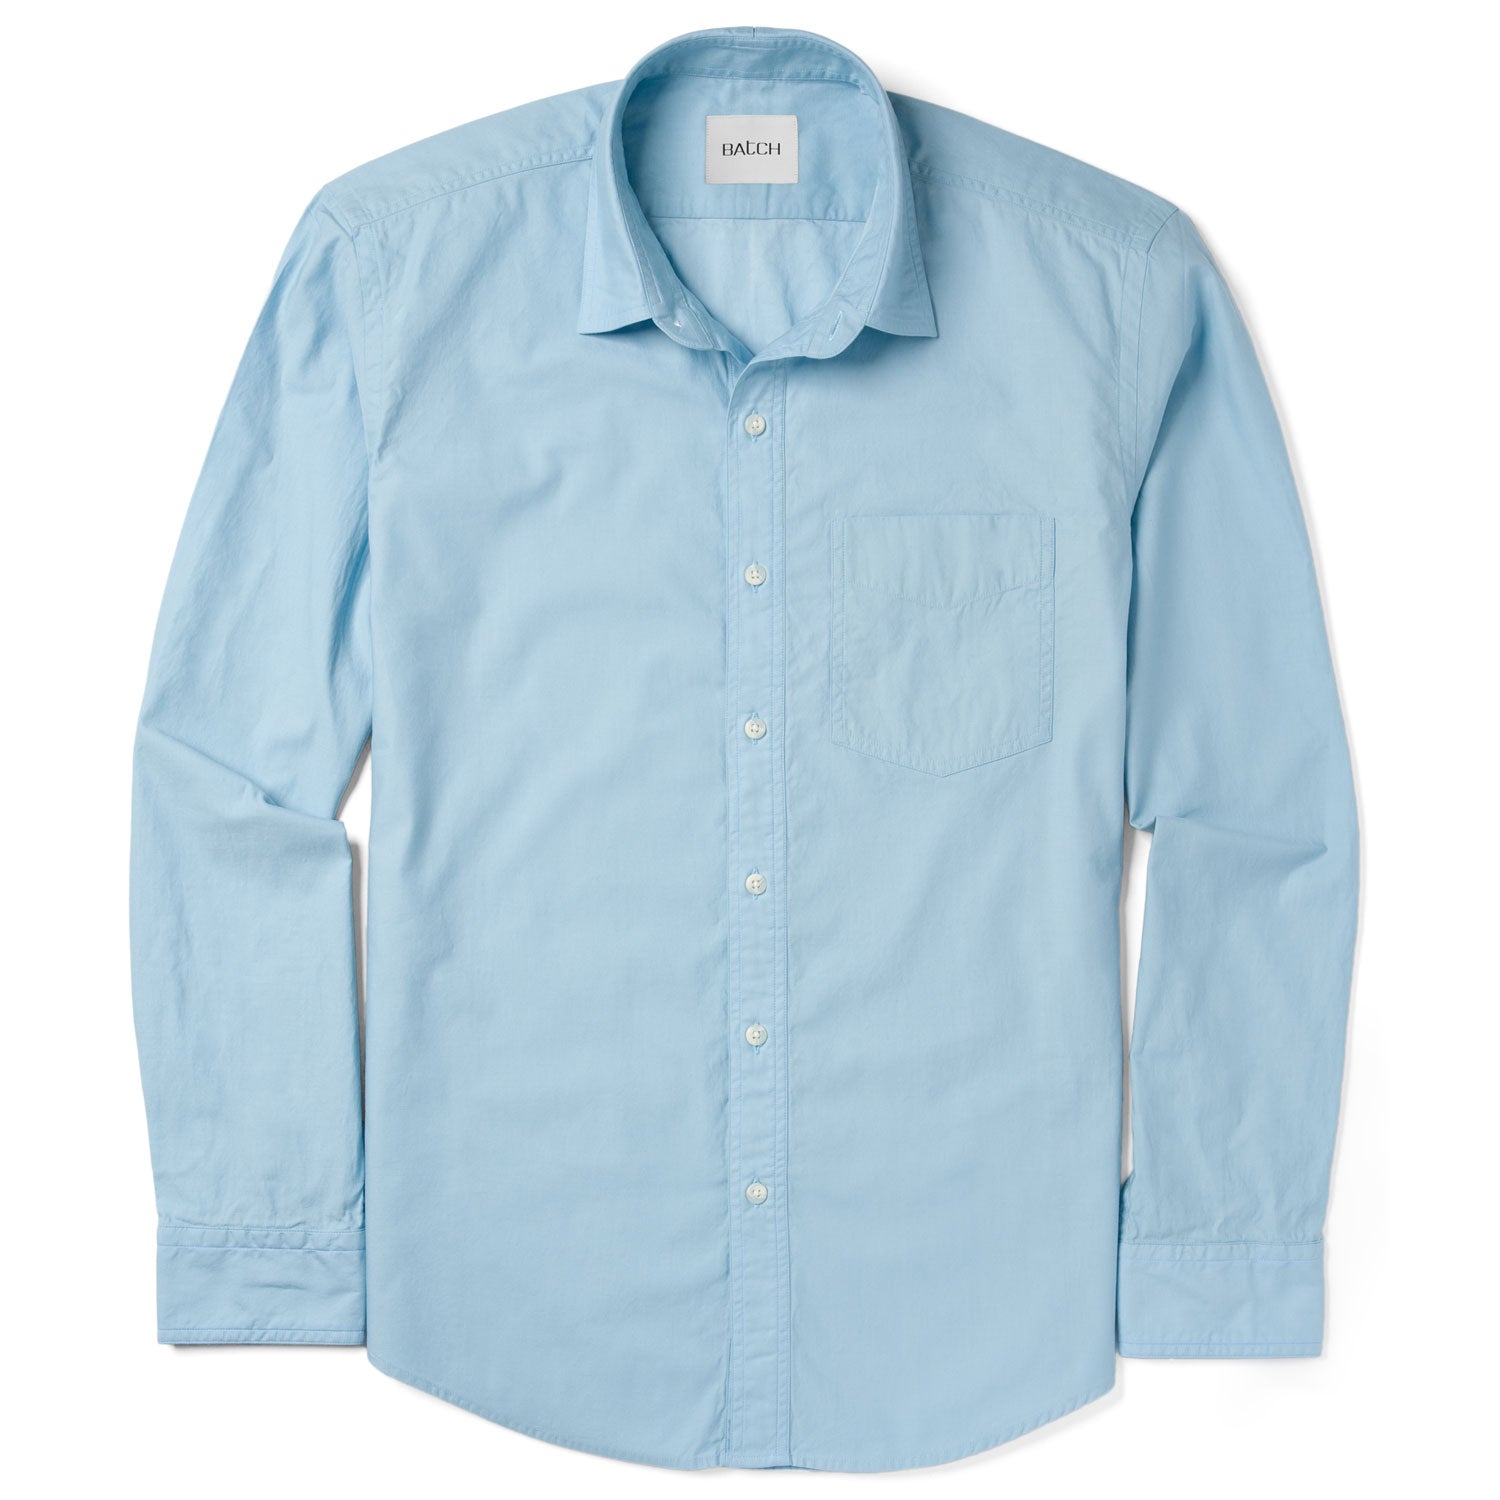 Essential 1 Pocket Casual Shirt - Light Mint Blue Mercerized Cotton